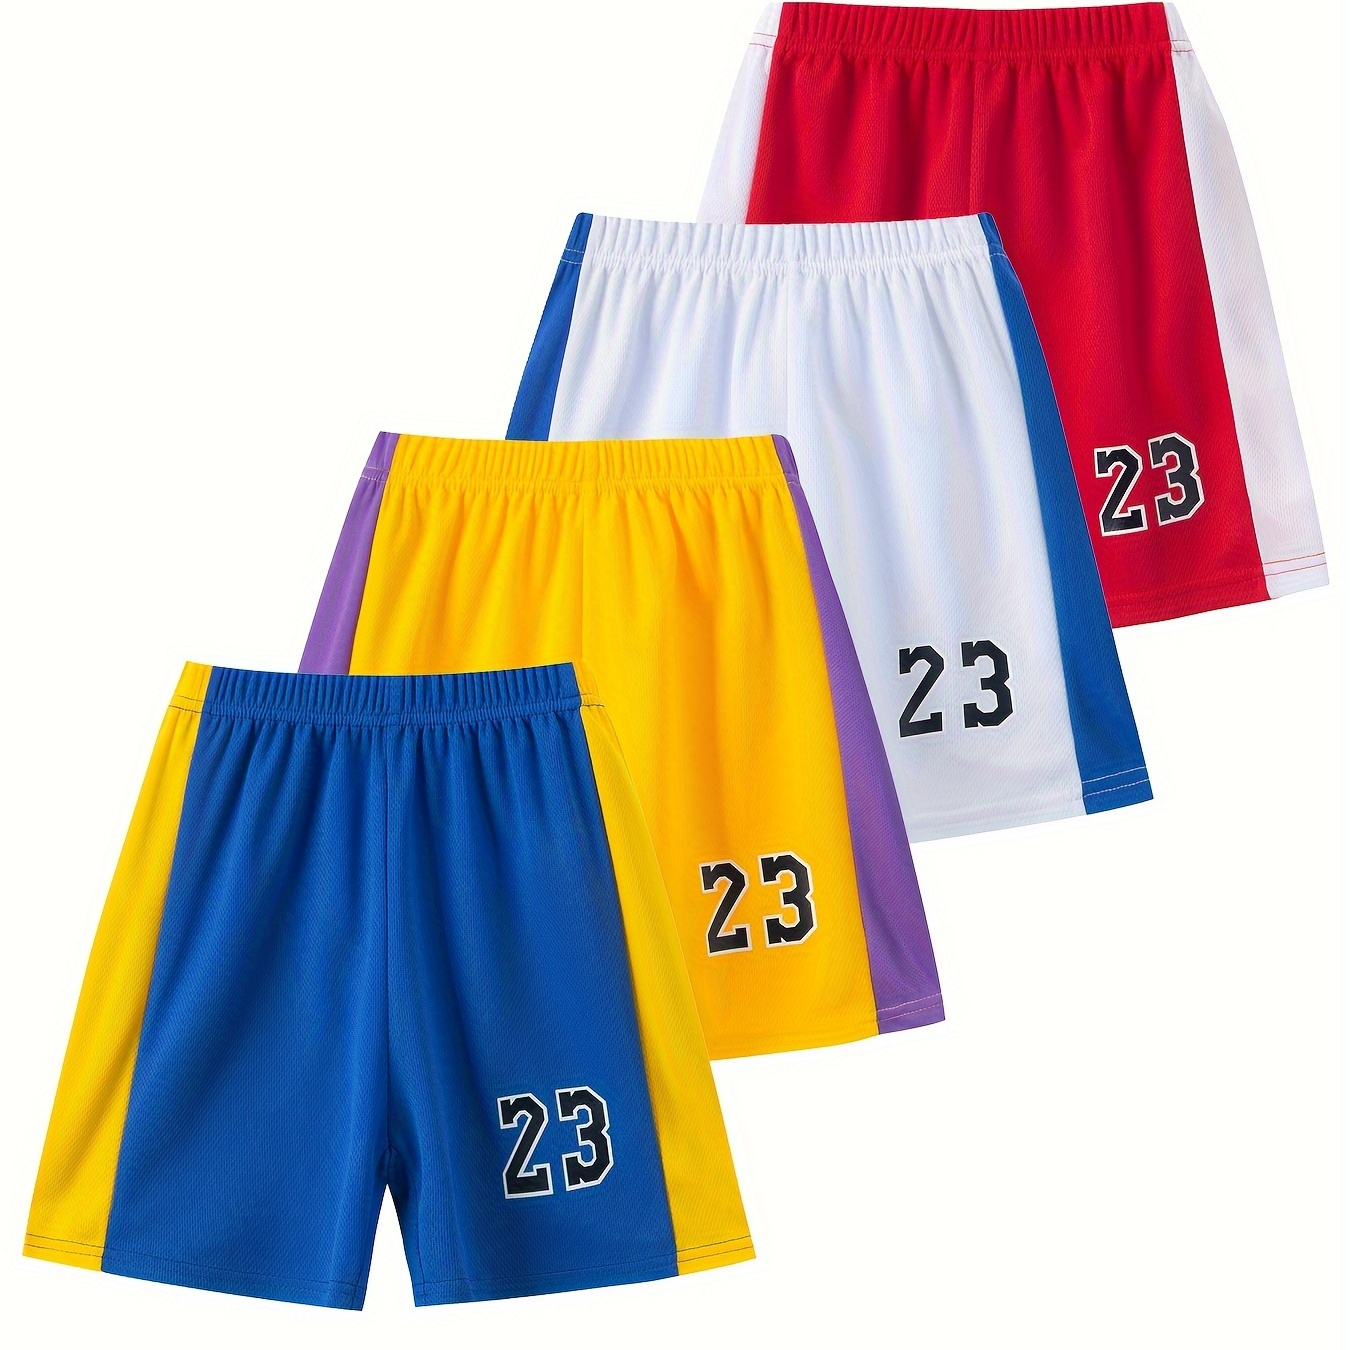 

4pcs Boy's Number 23 Pattern Basketball Shorts, Elastic Waist Comfy Mesh Breathable Summer Sports Training Shorts